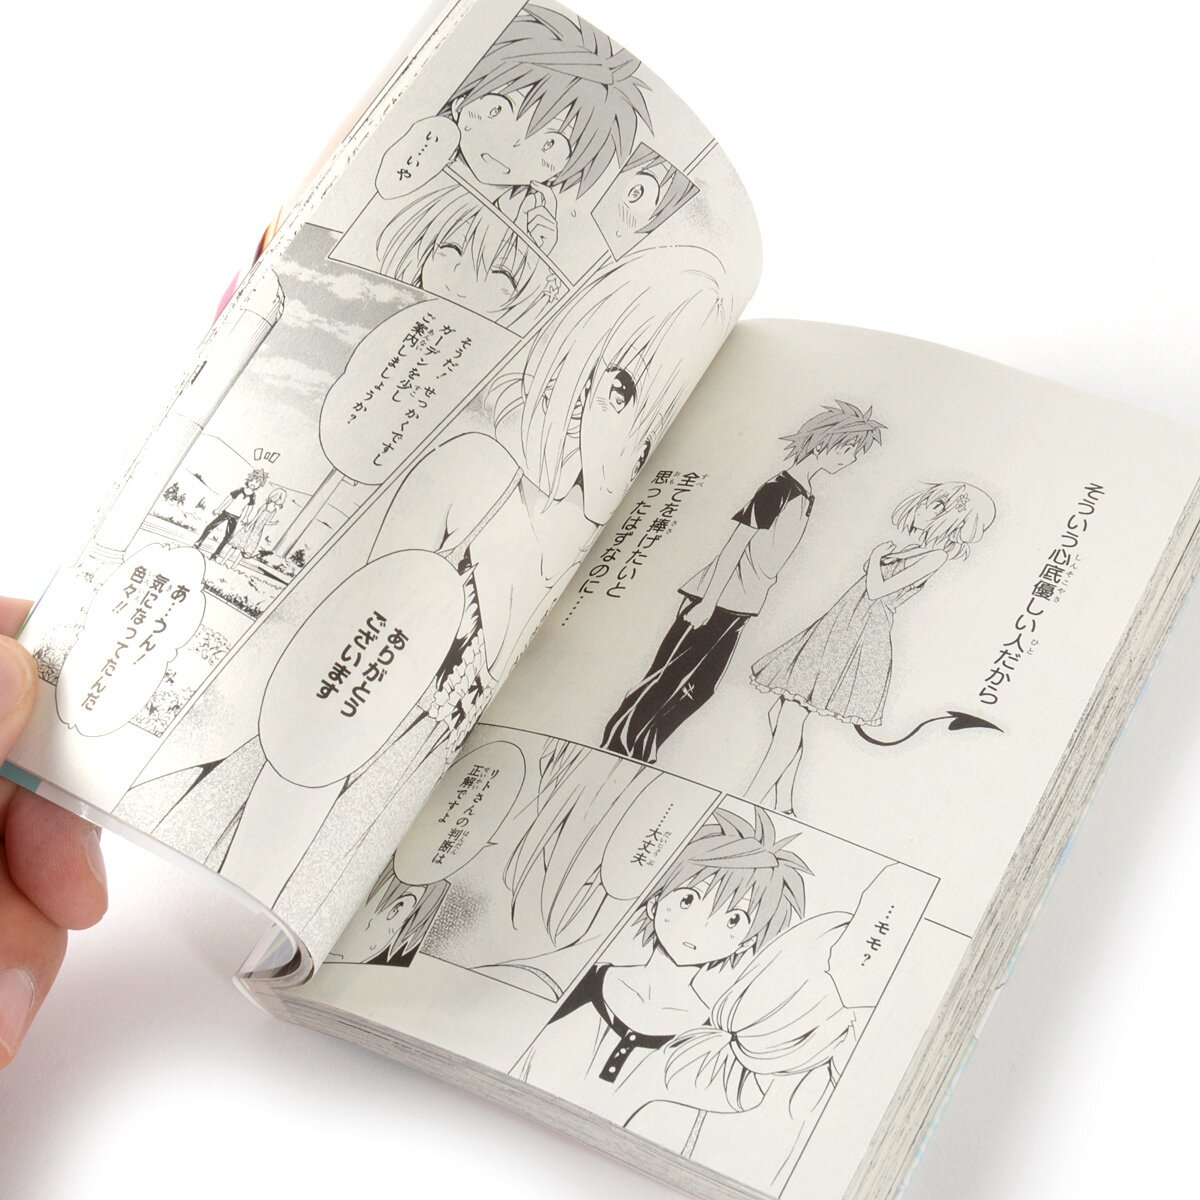 To Love Ru: Abunai Girls Talk (Light Novel) Manga